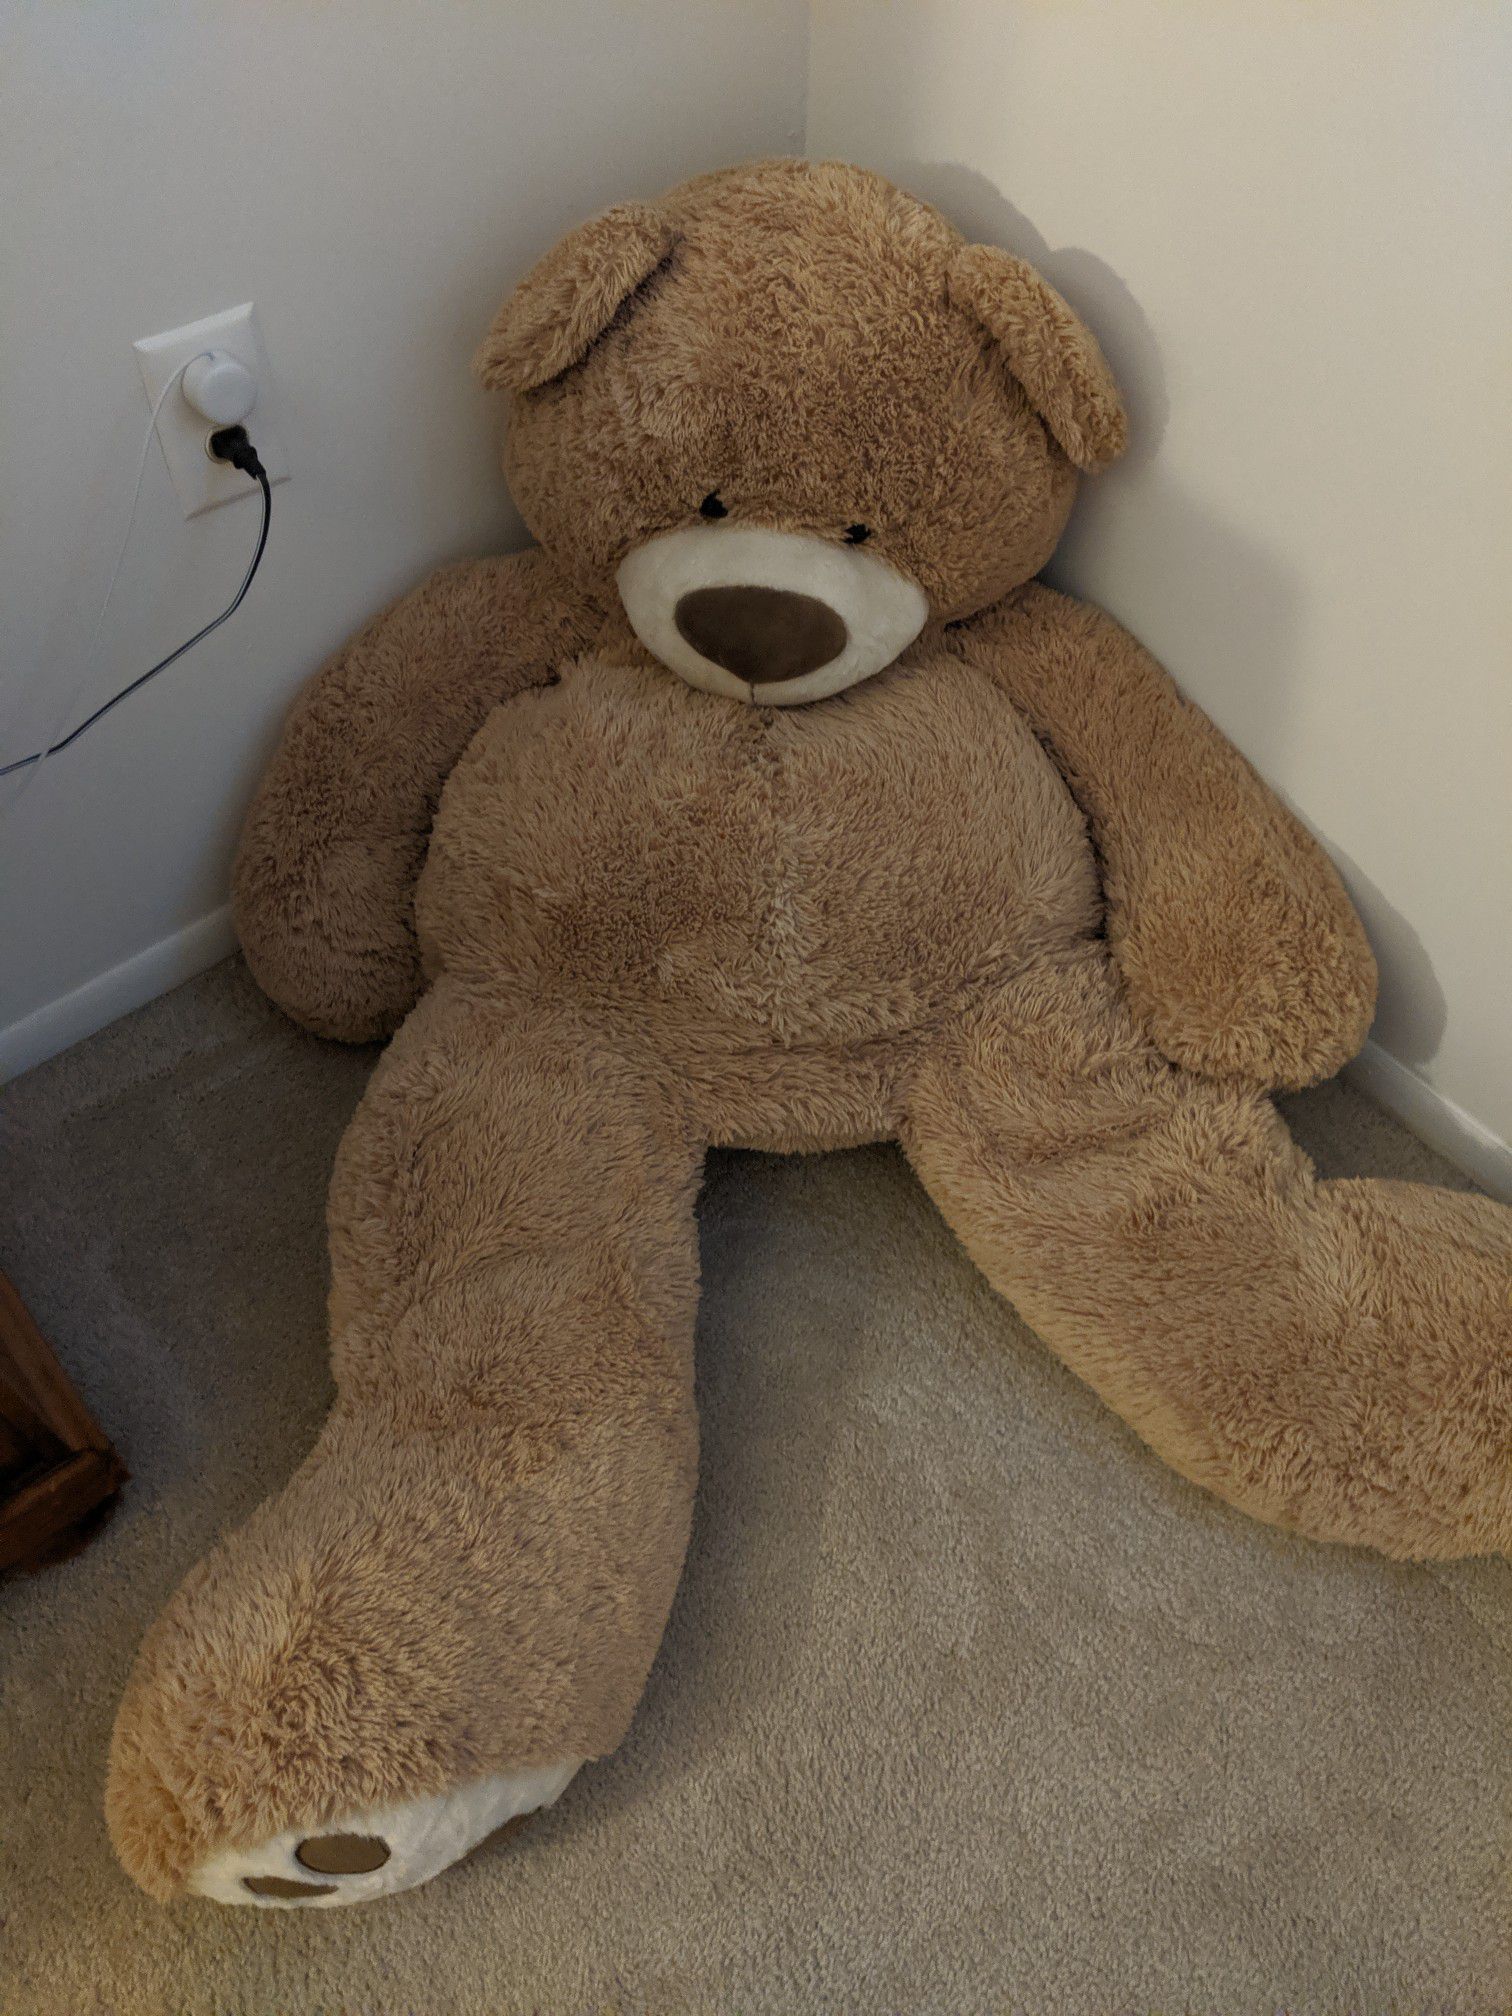 5ft huge gigantic teddy bear (FREE!)